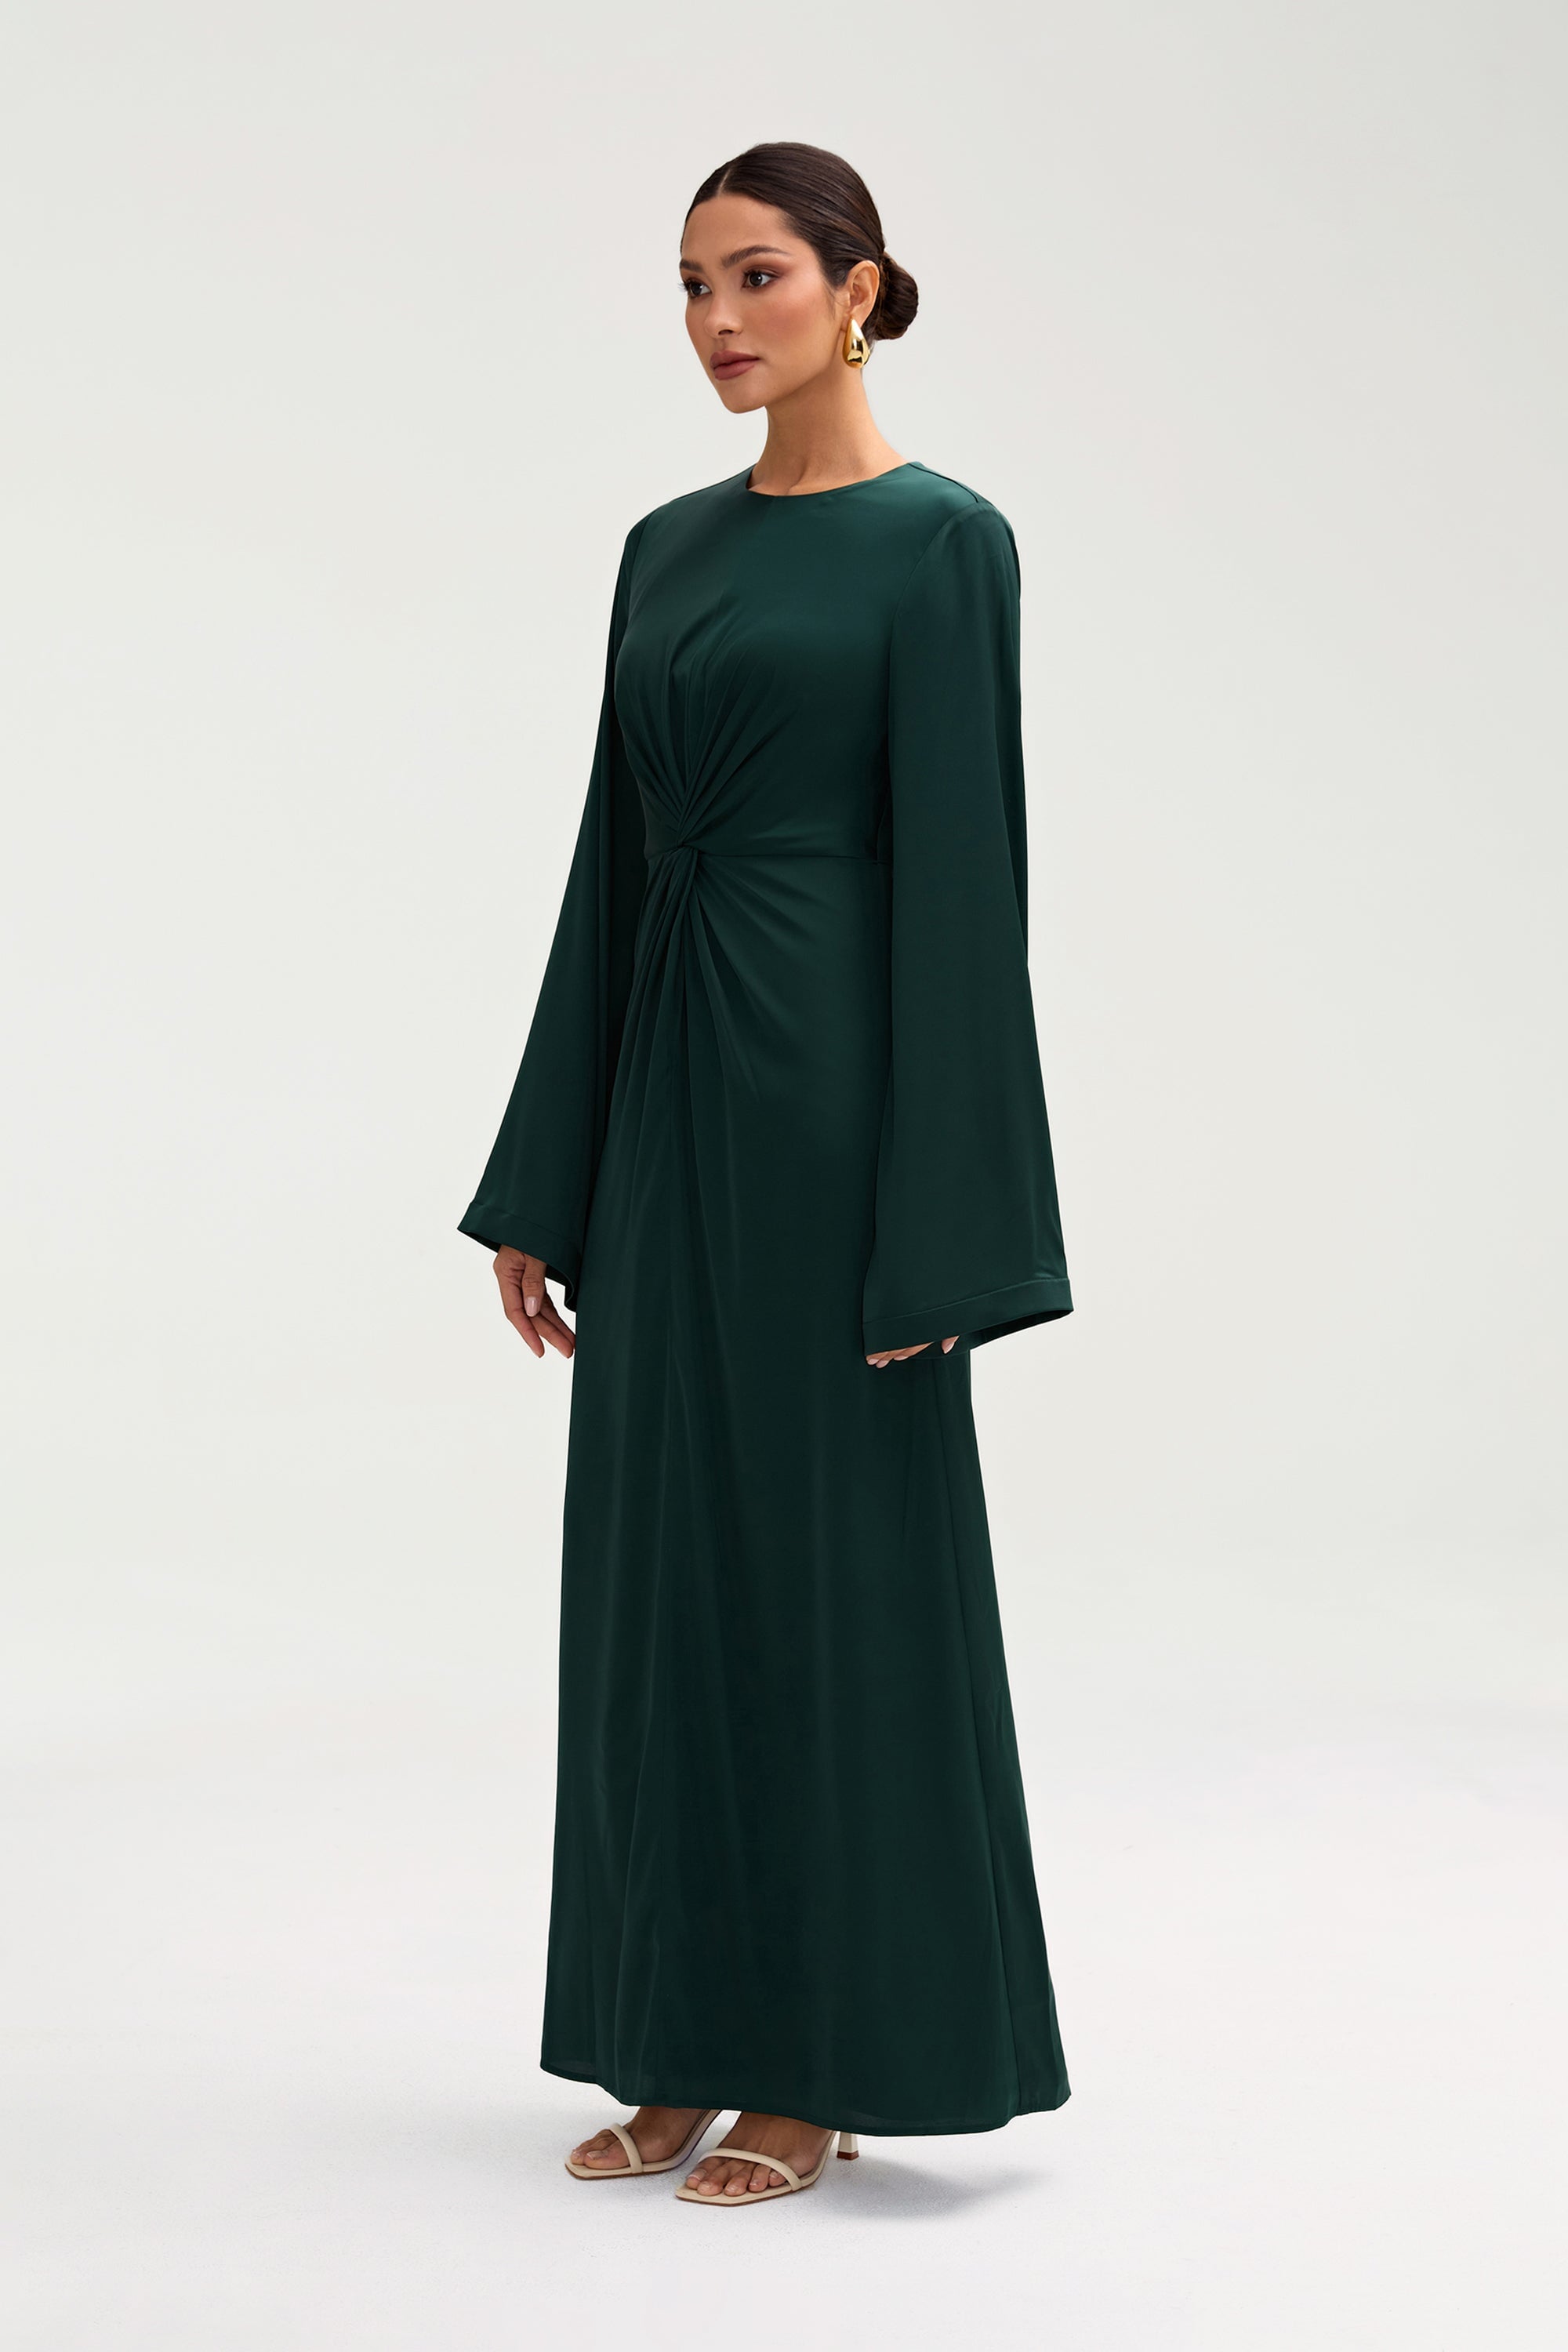 Duha Satin Twist Front Maxi Dress - Emerald Clothing Veiled 